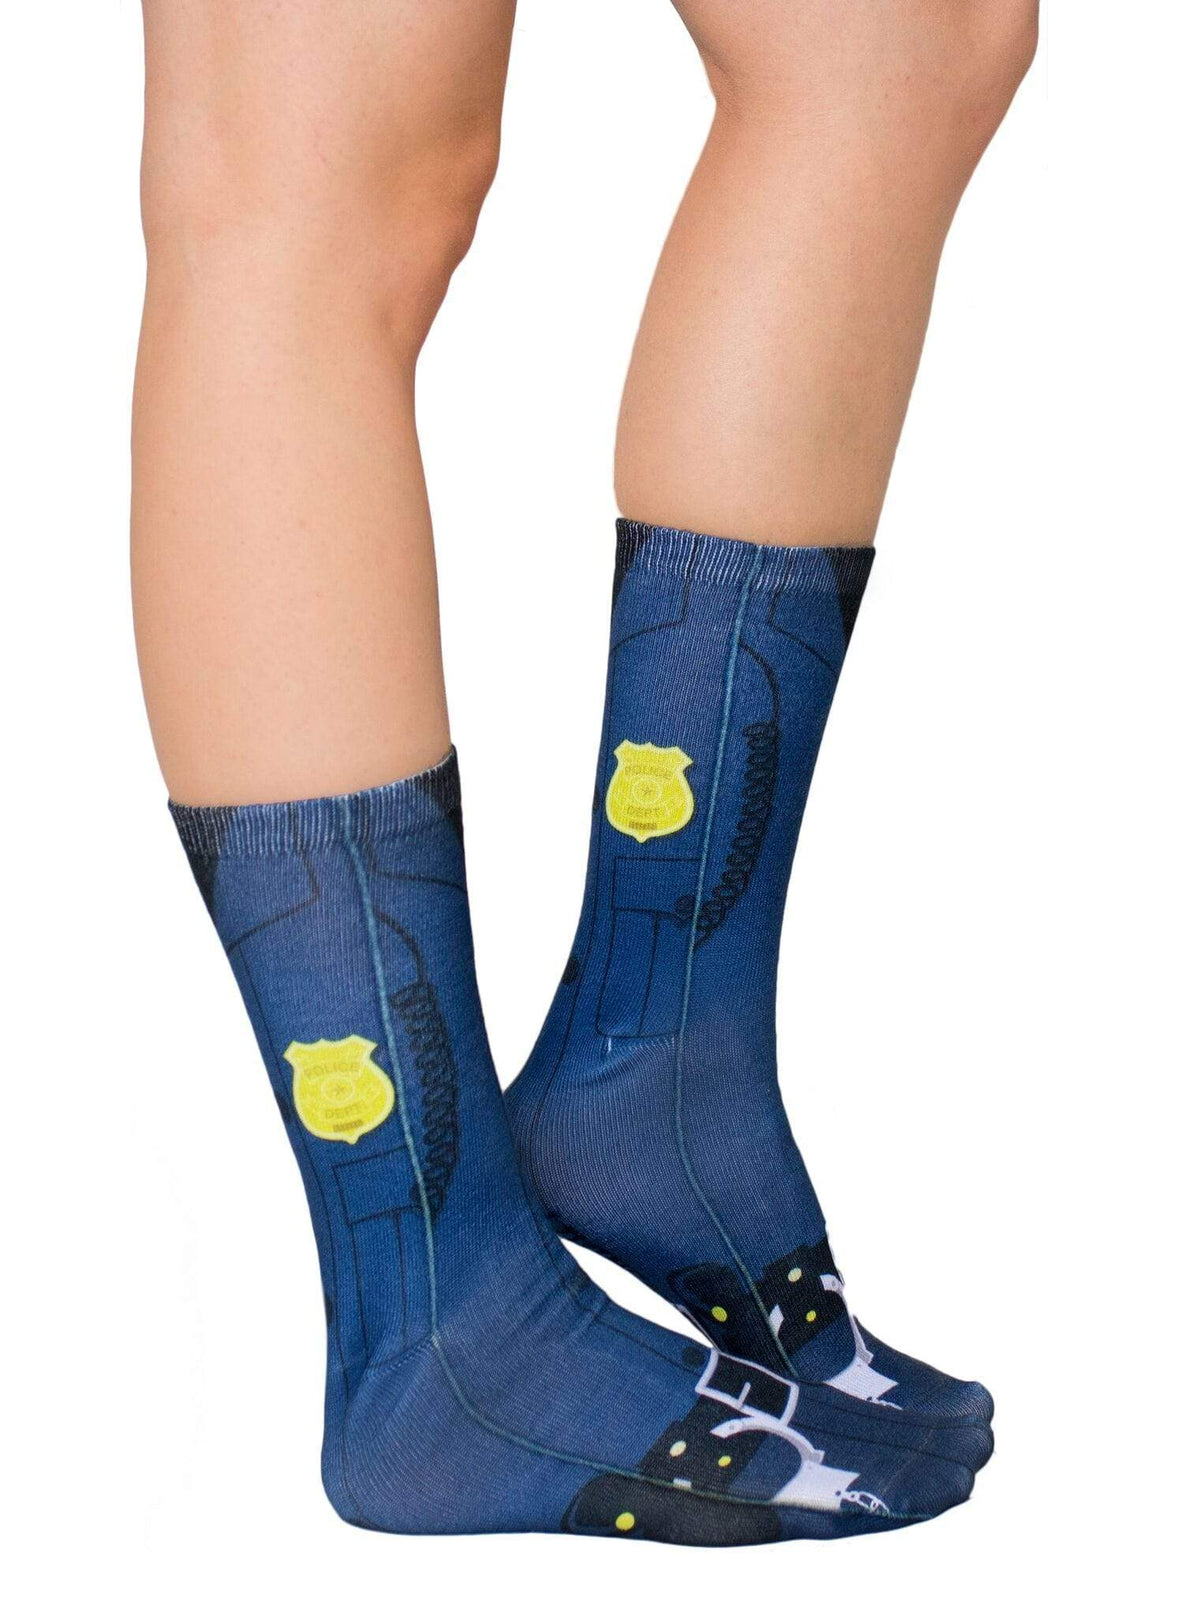 Police Socks - Unisex Crew Sock Blue